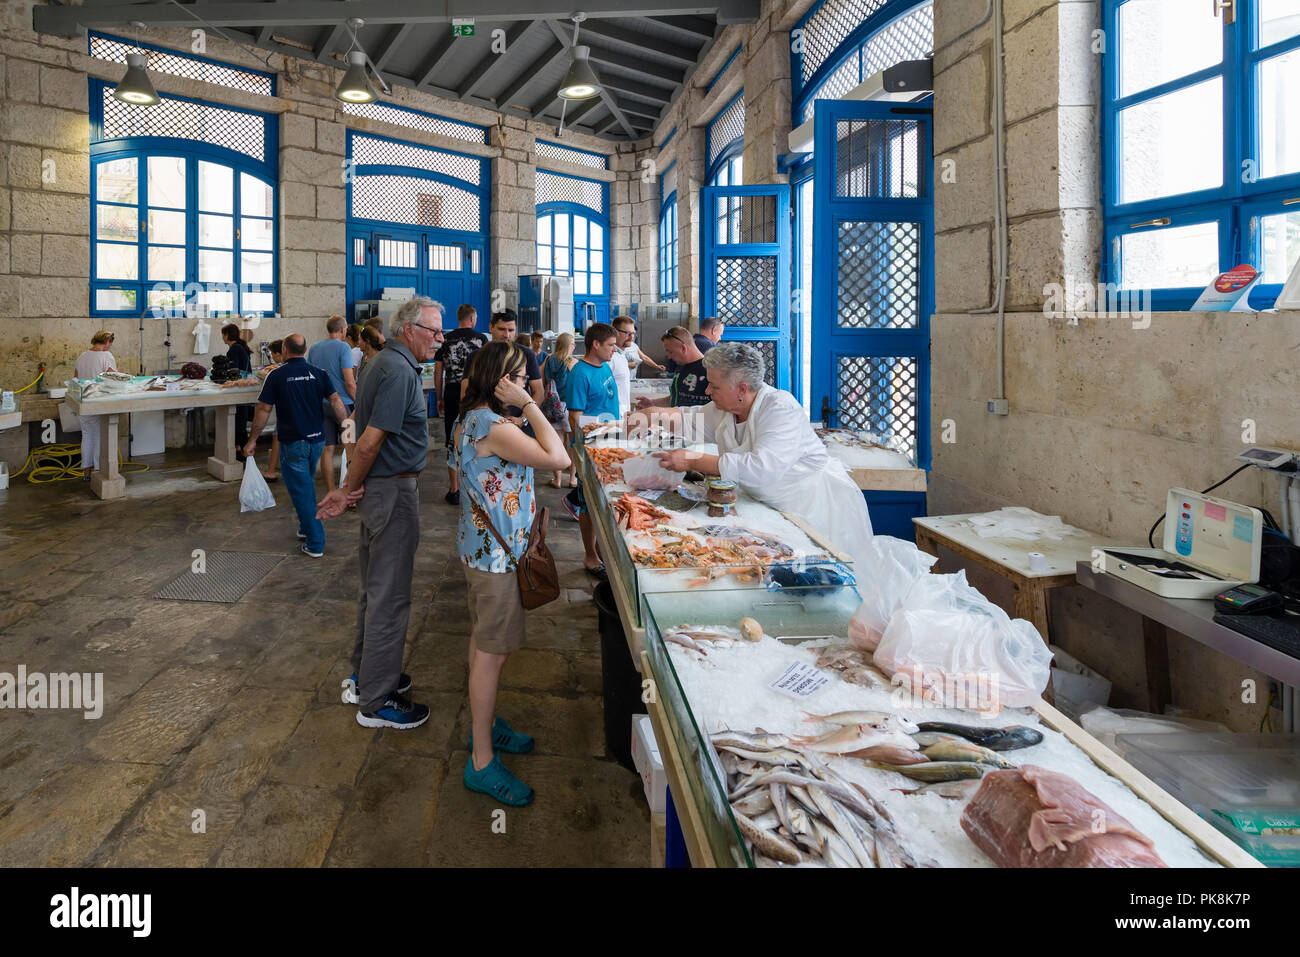 A saleswoman serves a customer at the fish market in the market hall of Mali Lošinj, island of Lošinj, Kvarner bay, Croatia Stock Photo